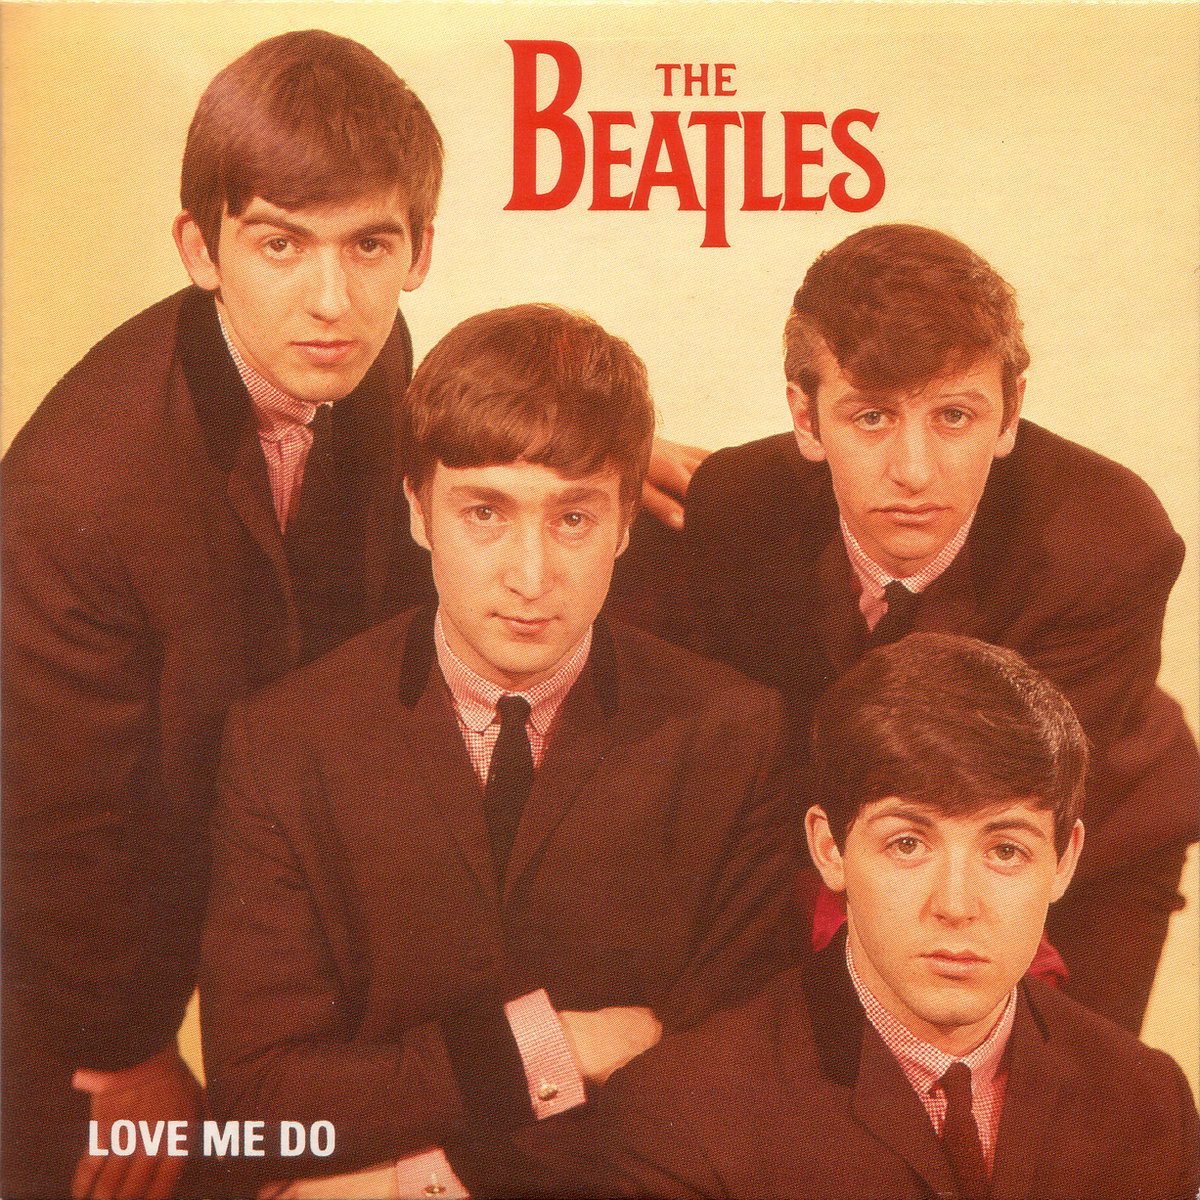 Иллюстрация к песне Love Me Do (The Beatles)